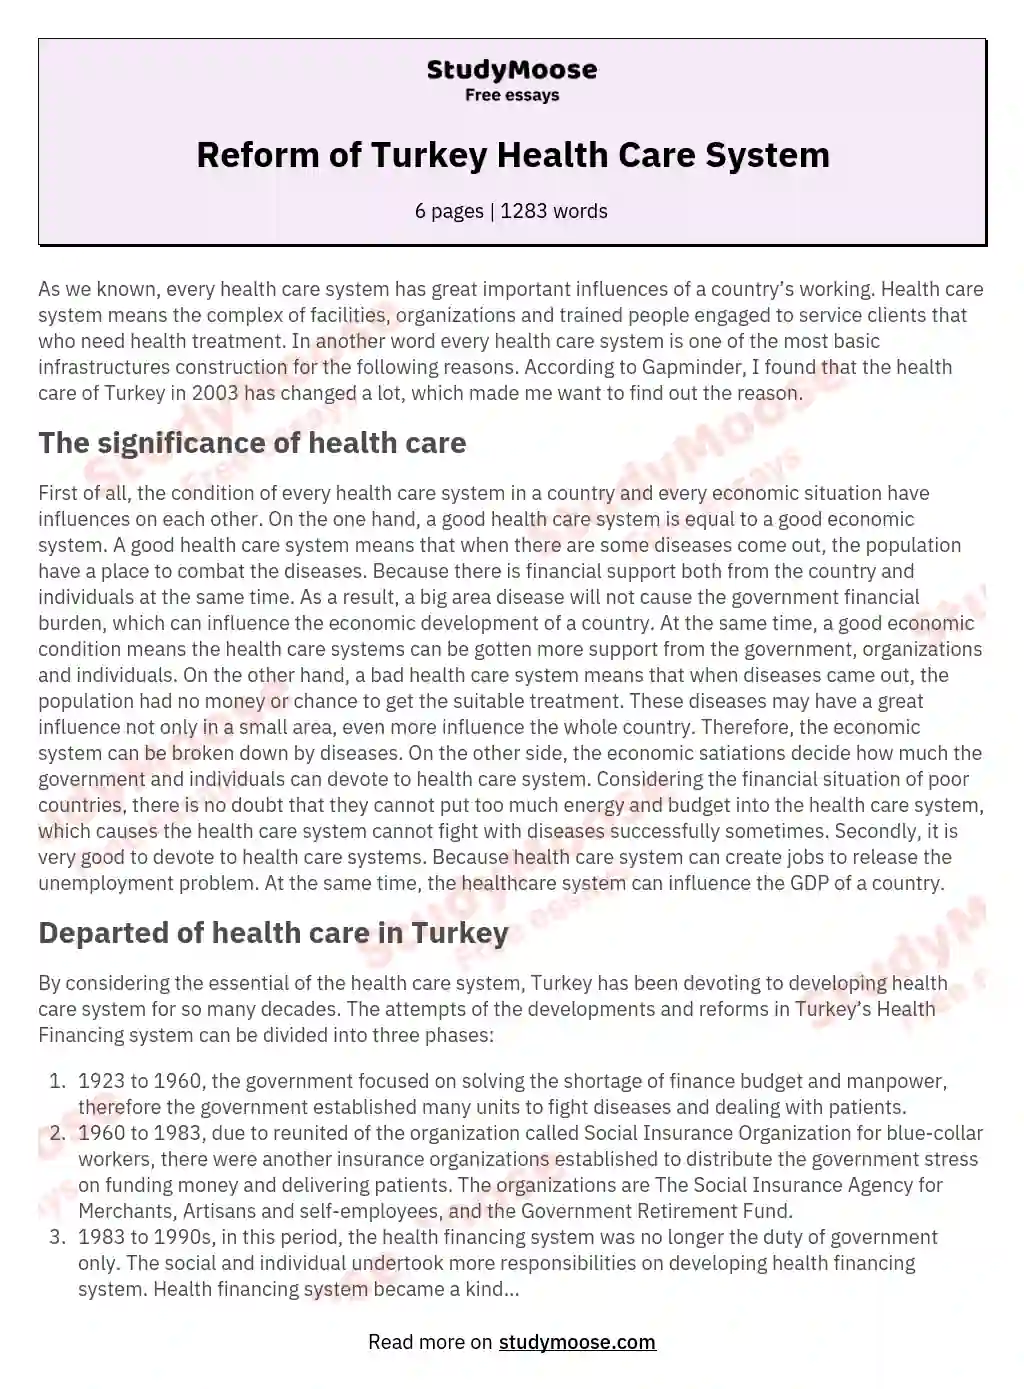 Reform of Turkey Health Care System essay